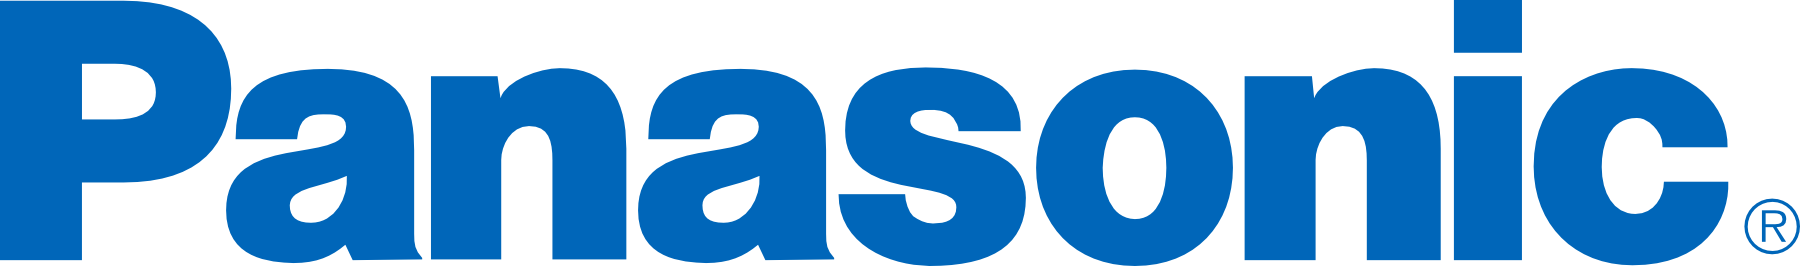 Logo de Panasonic 